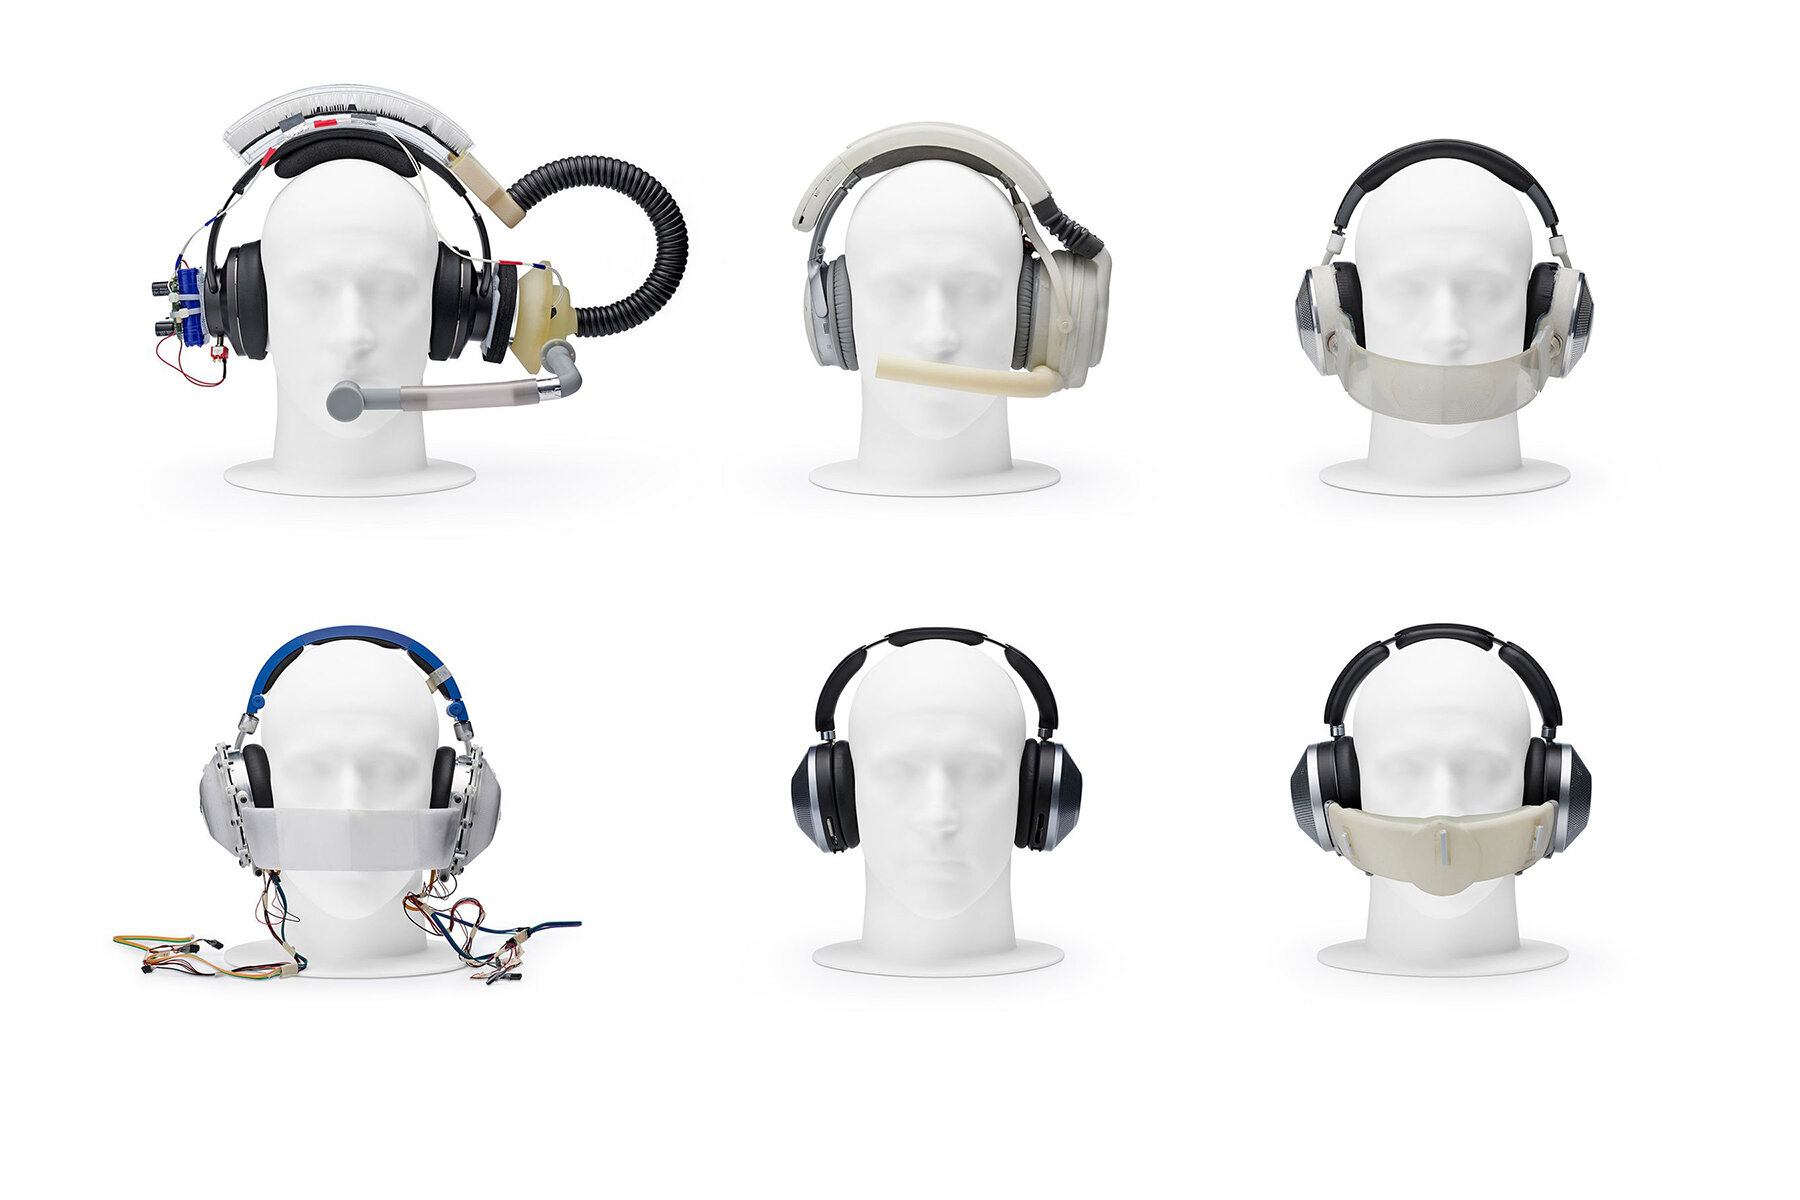 dyson-futuristic-noise-canceling-headphones-built-in-air-purifier-designboom-21800